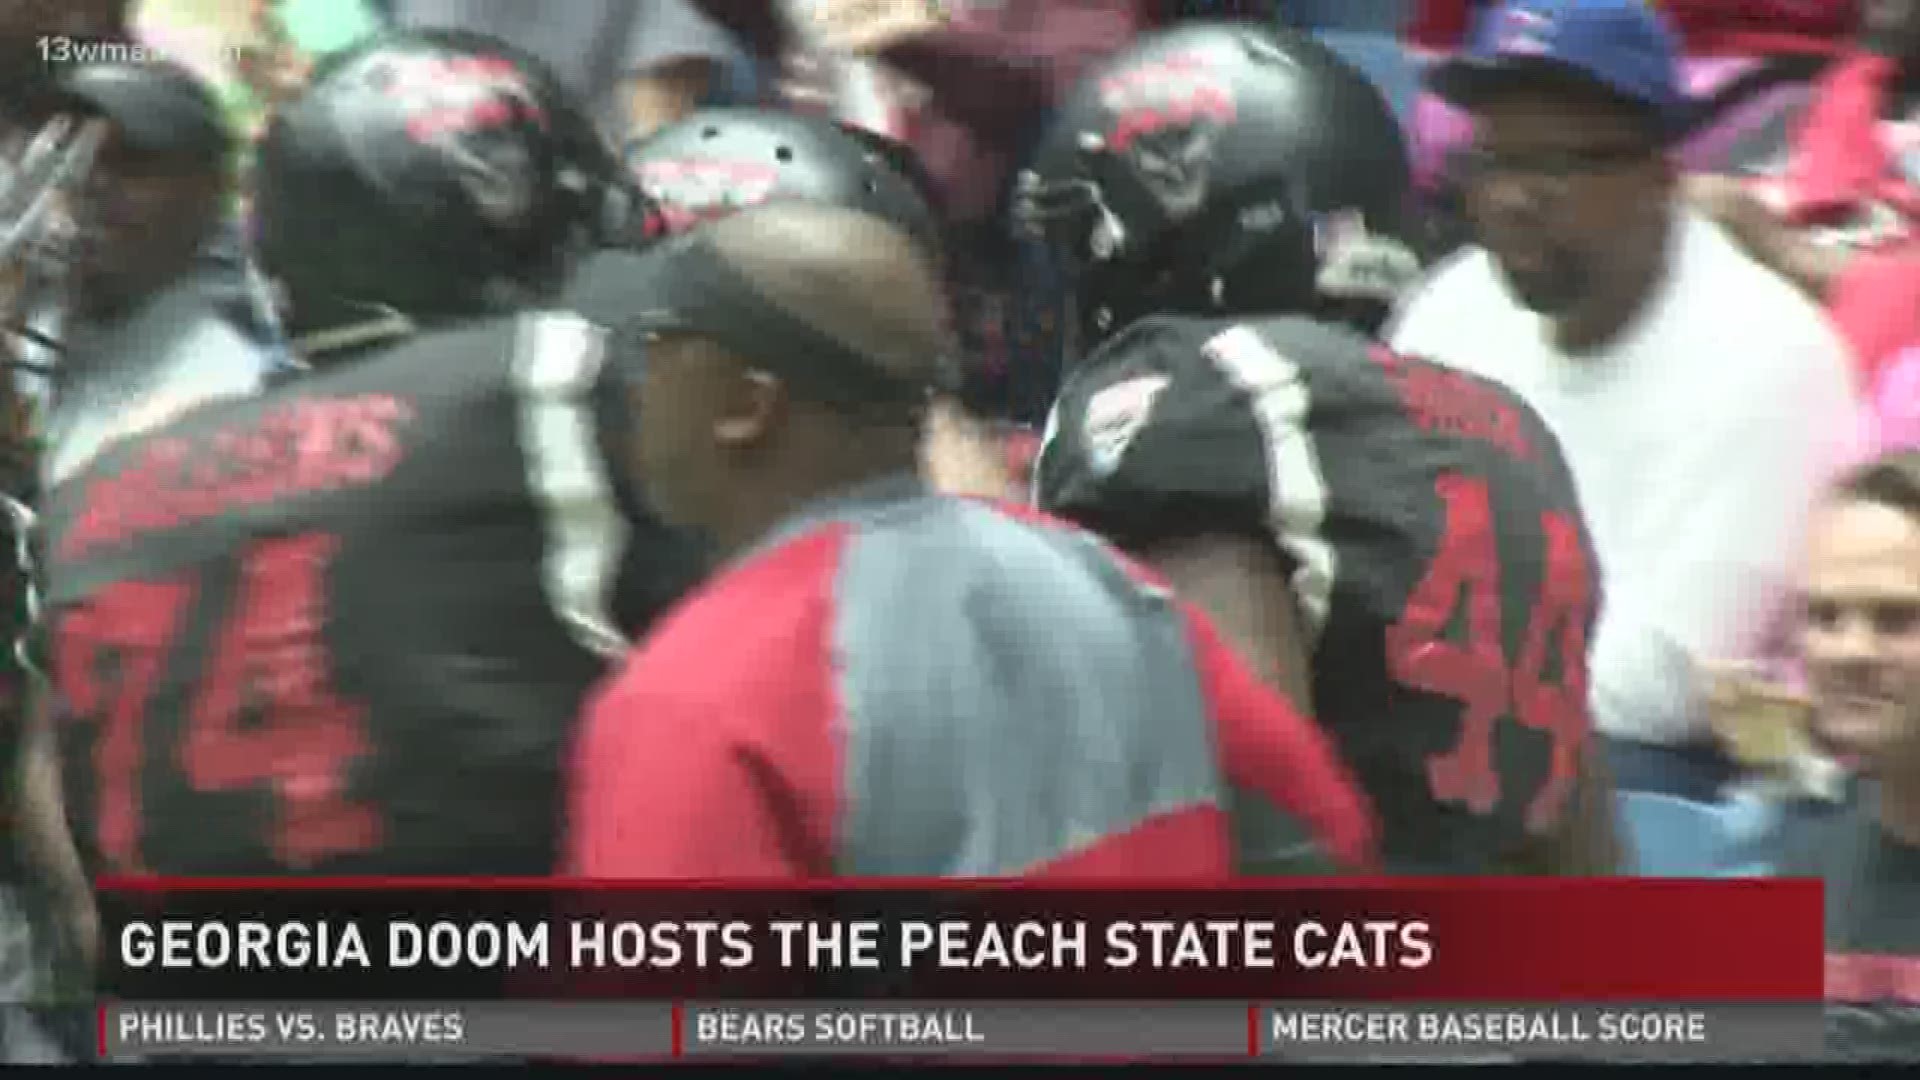 Georgia Doom host the Peach State Cats